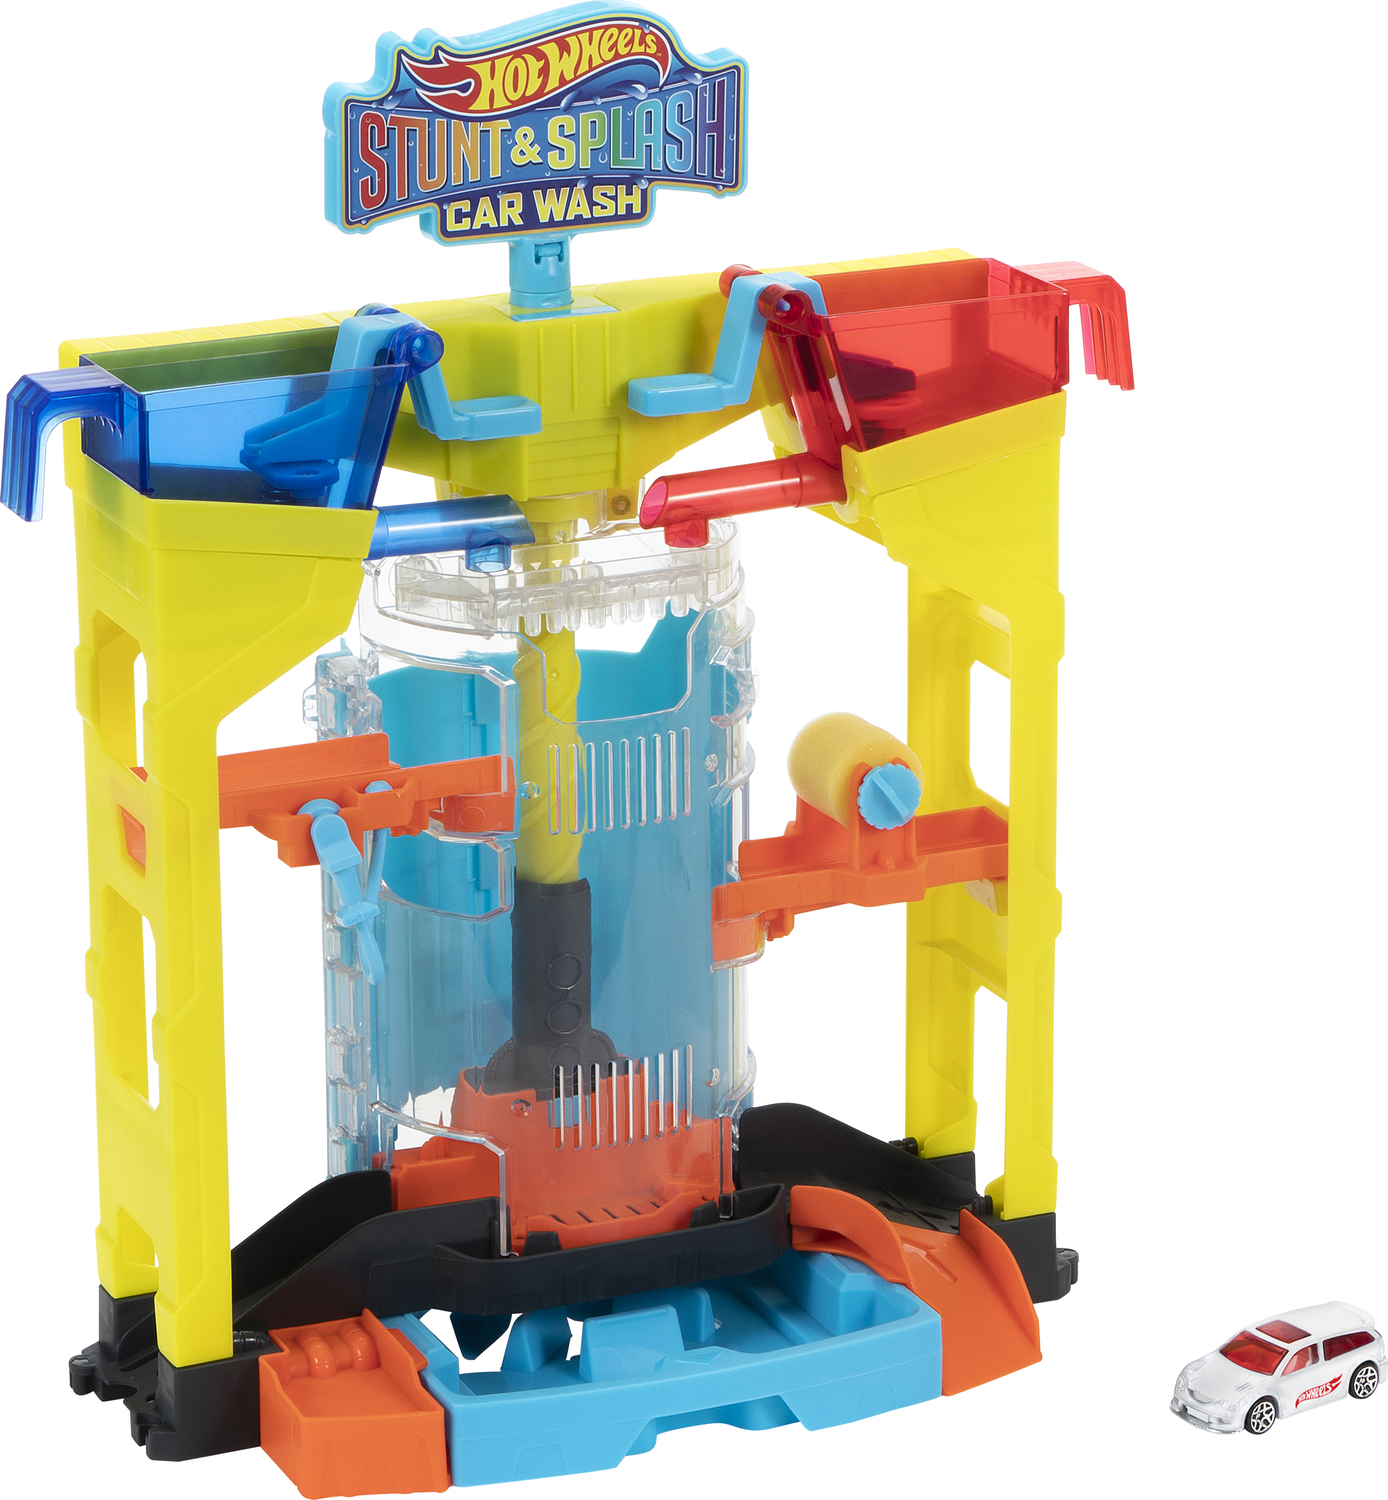 Hot Wheels City toy vehicle - The Toy Box Hanover